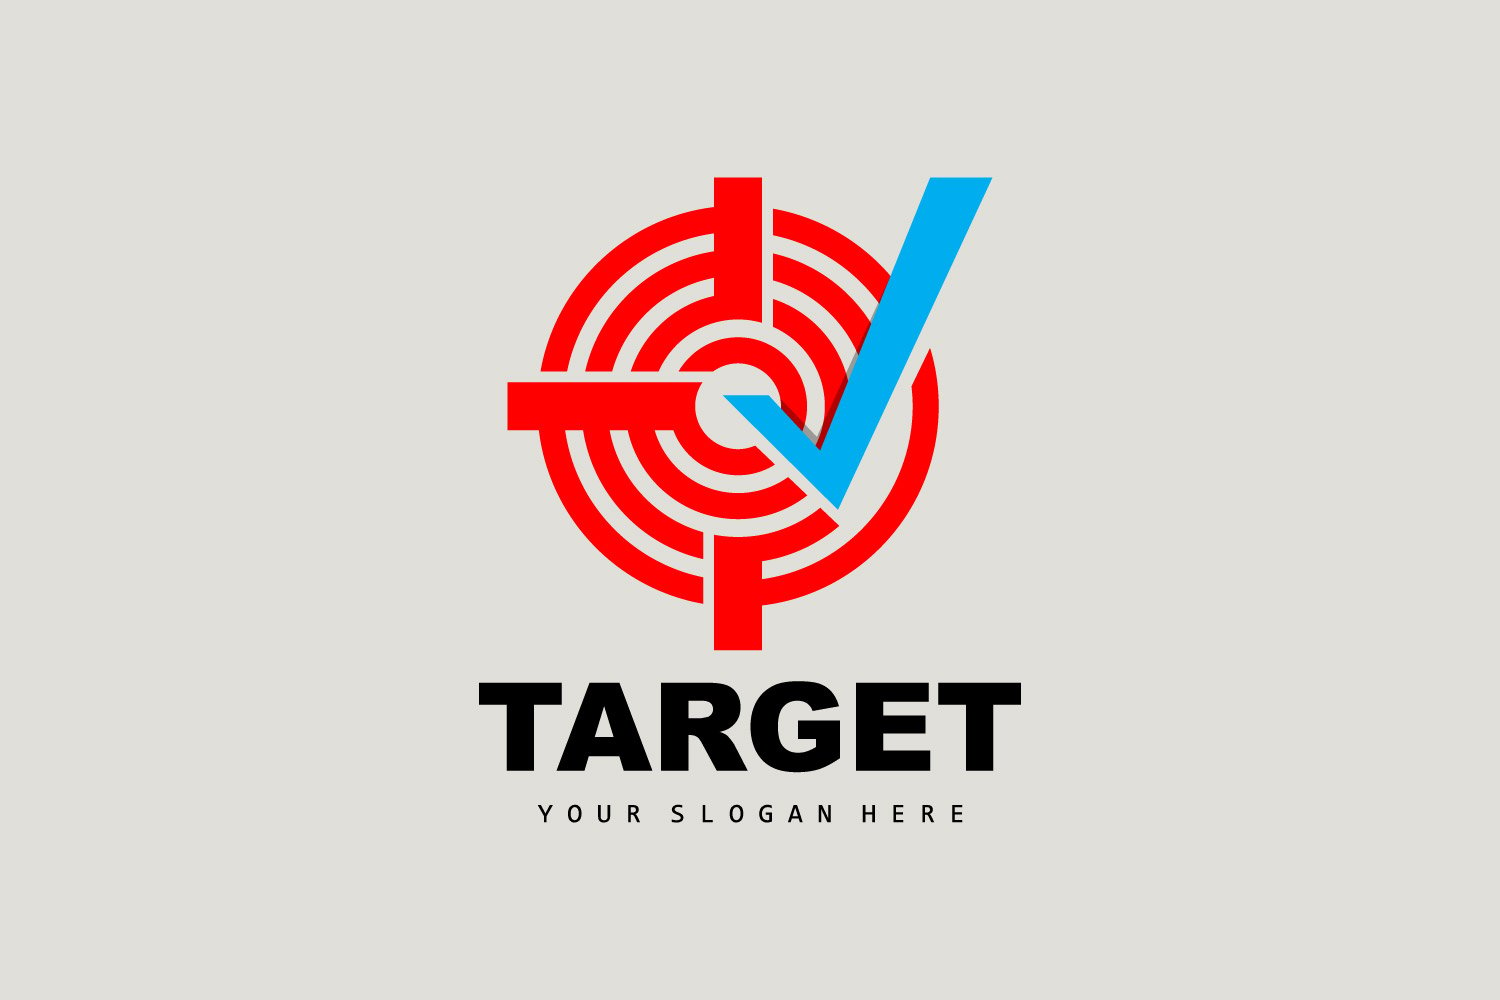 Template #405721 Vector Target Webdesign Template - Logo template Preview